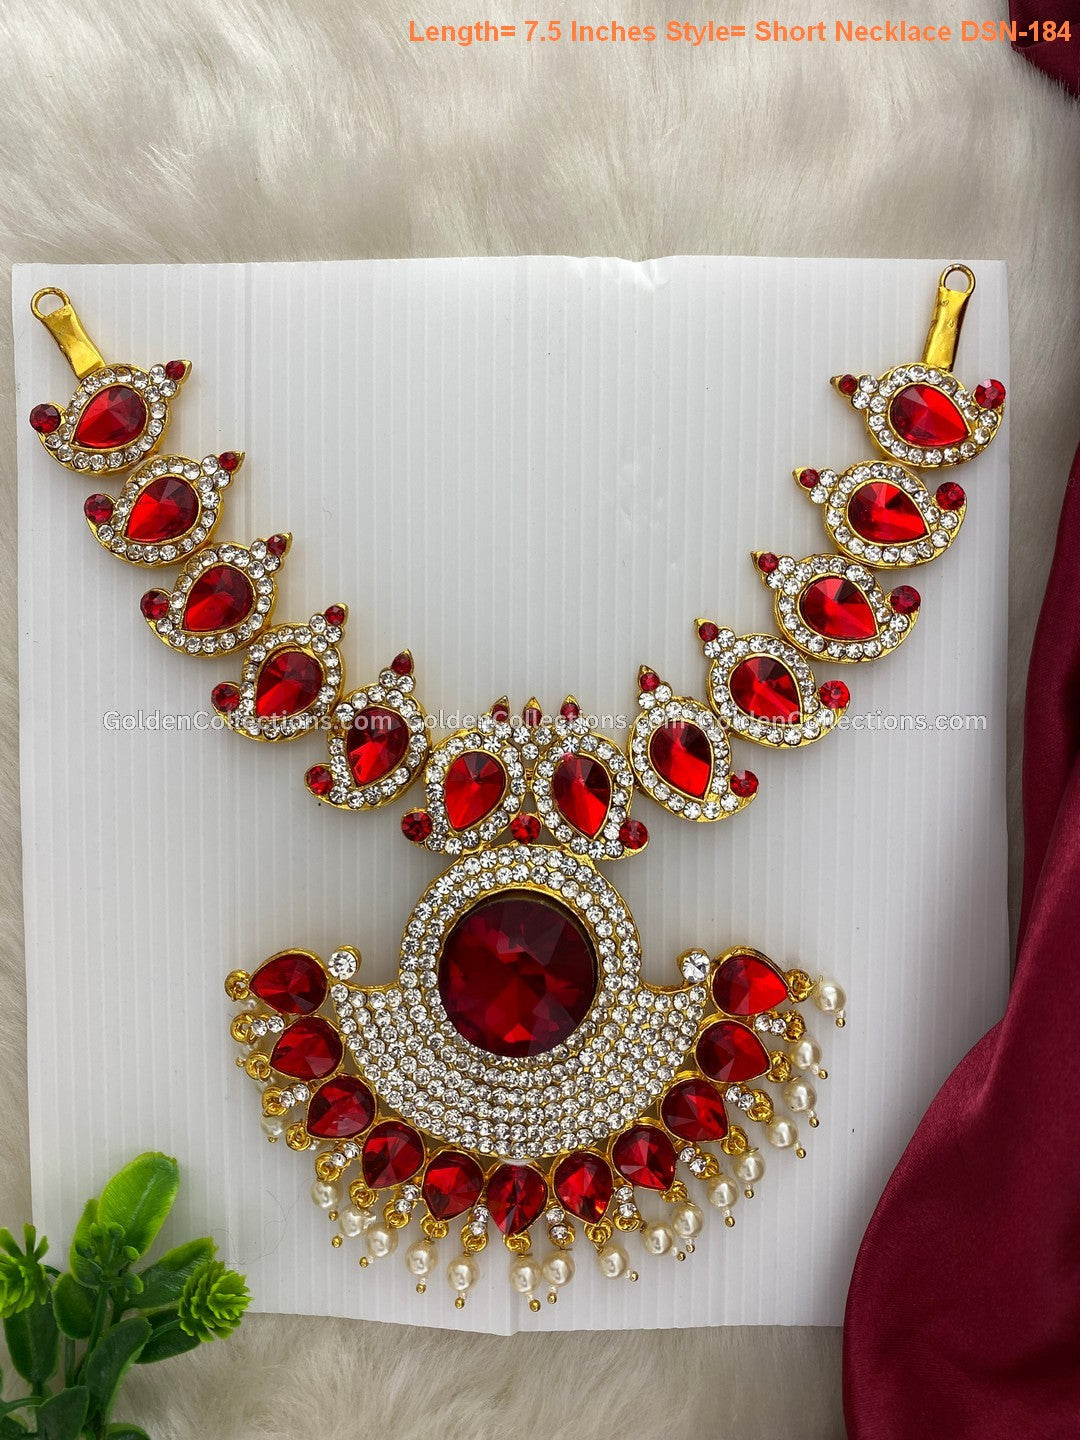 Amman Short Necklace - Timeless Deity Jewelry - DSN-184